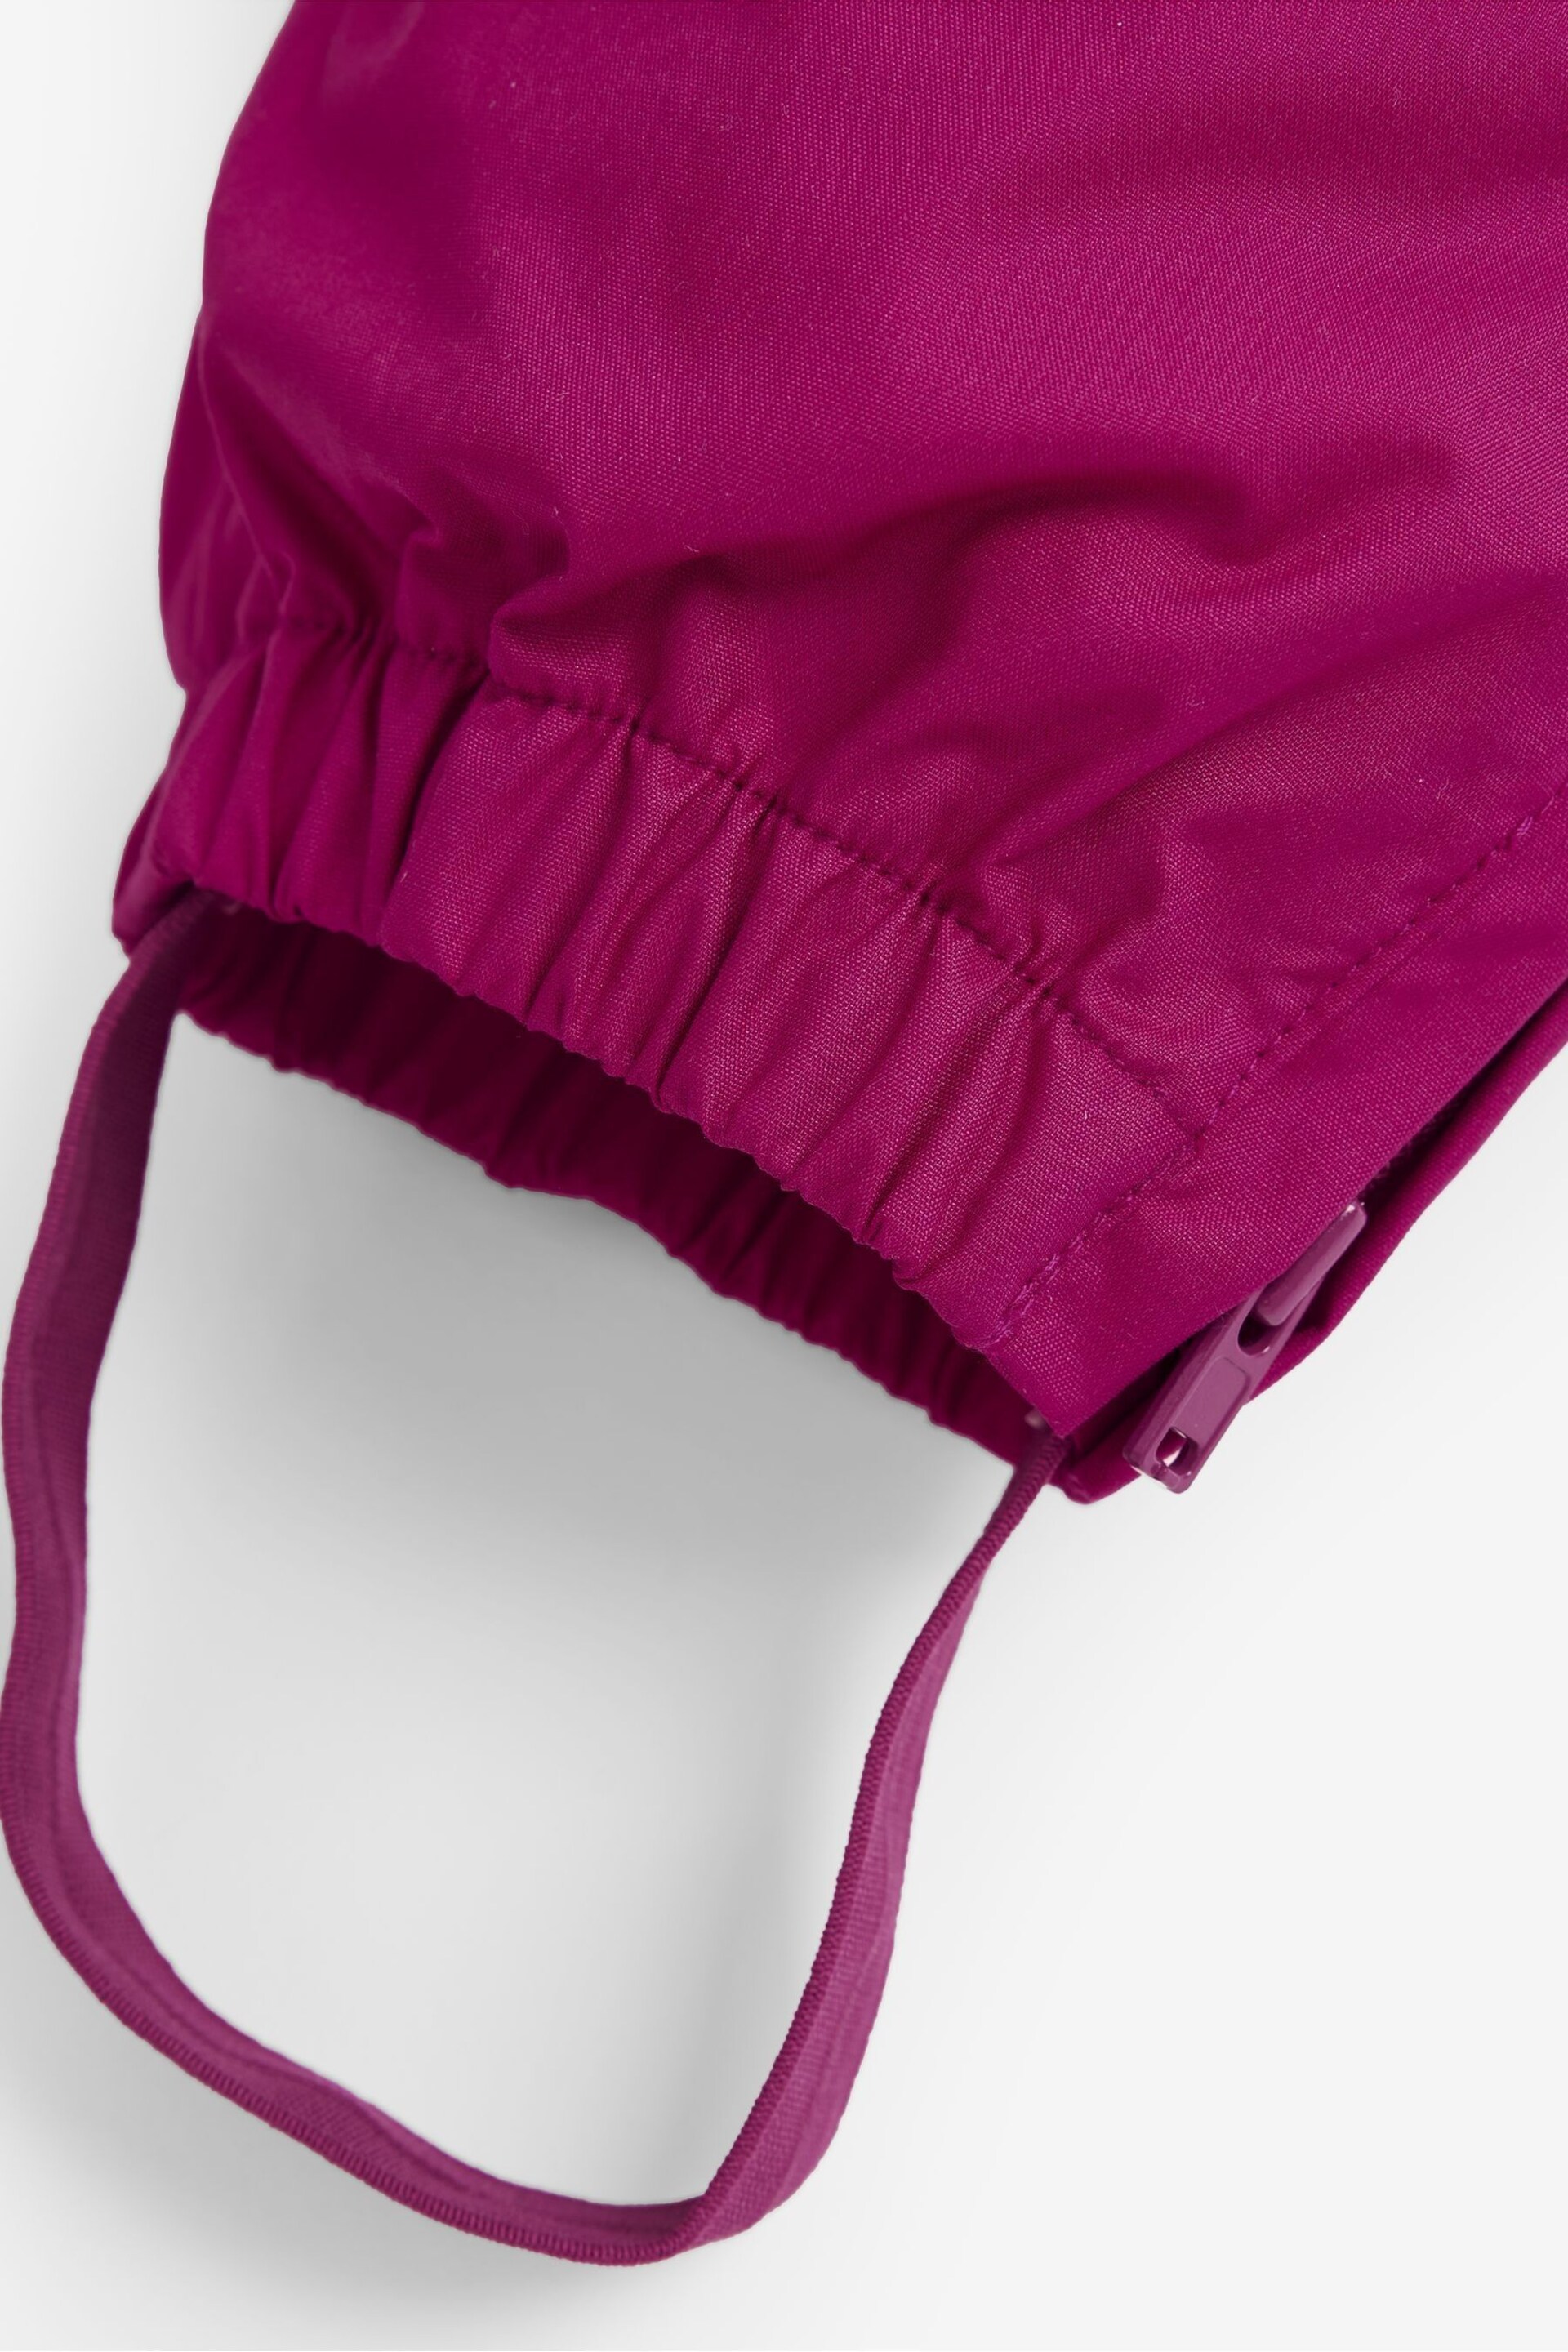 JoJo Maman Bébé Berry Pink Pack-Away Waterproof Trousers - Image 3 of 4